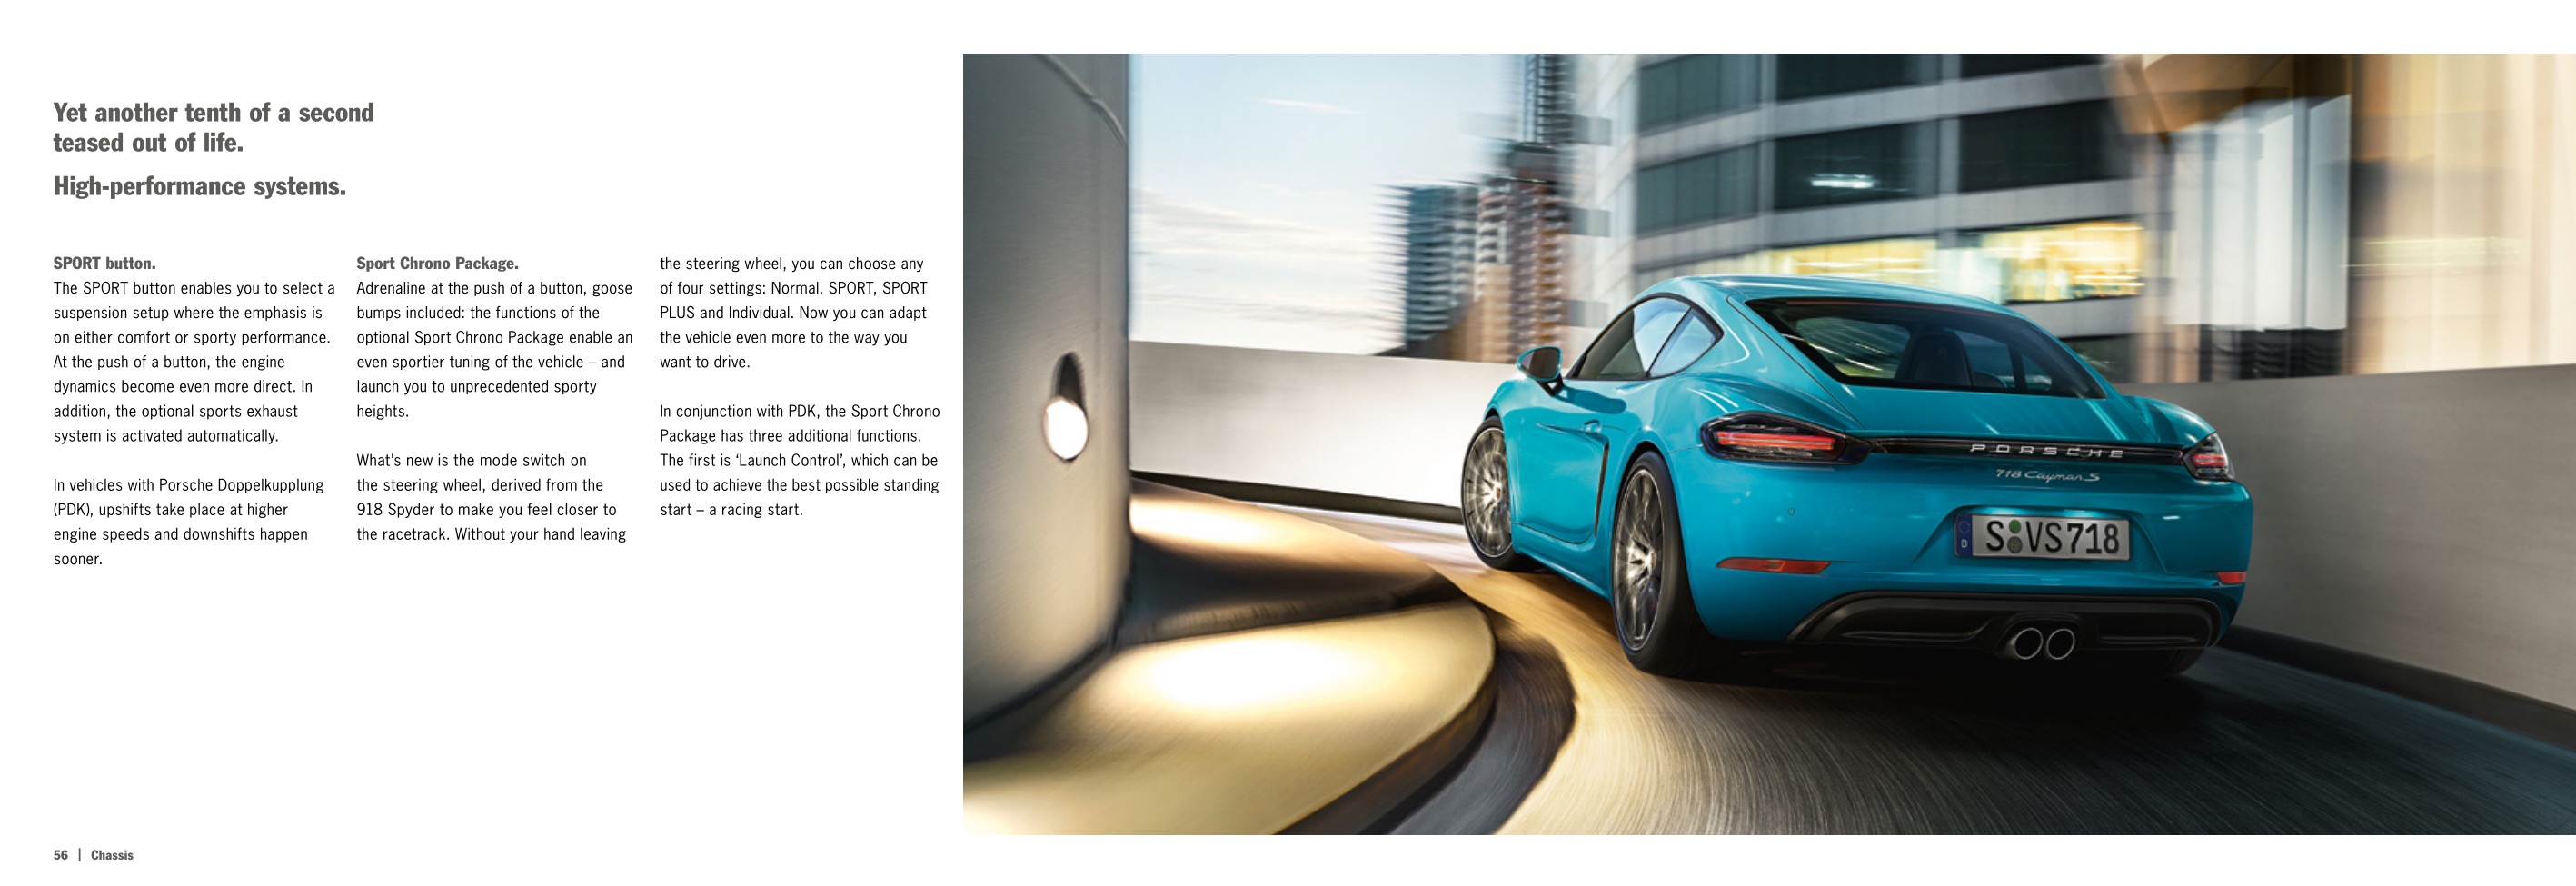 2017 Porsche 718 Brochure Page 10